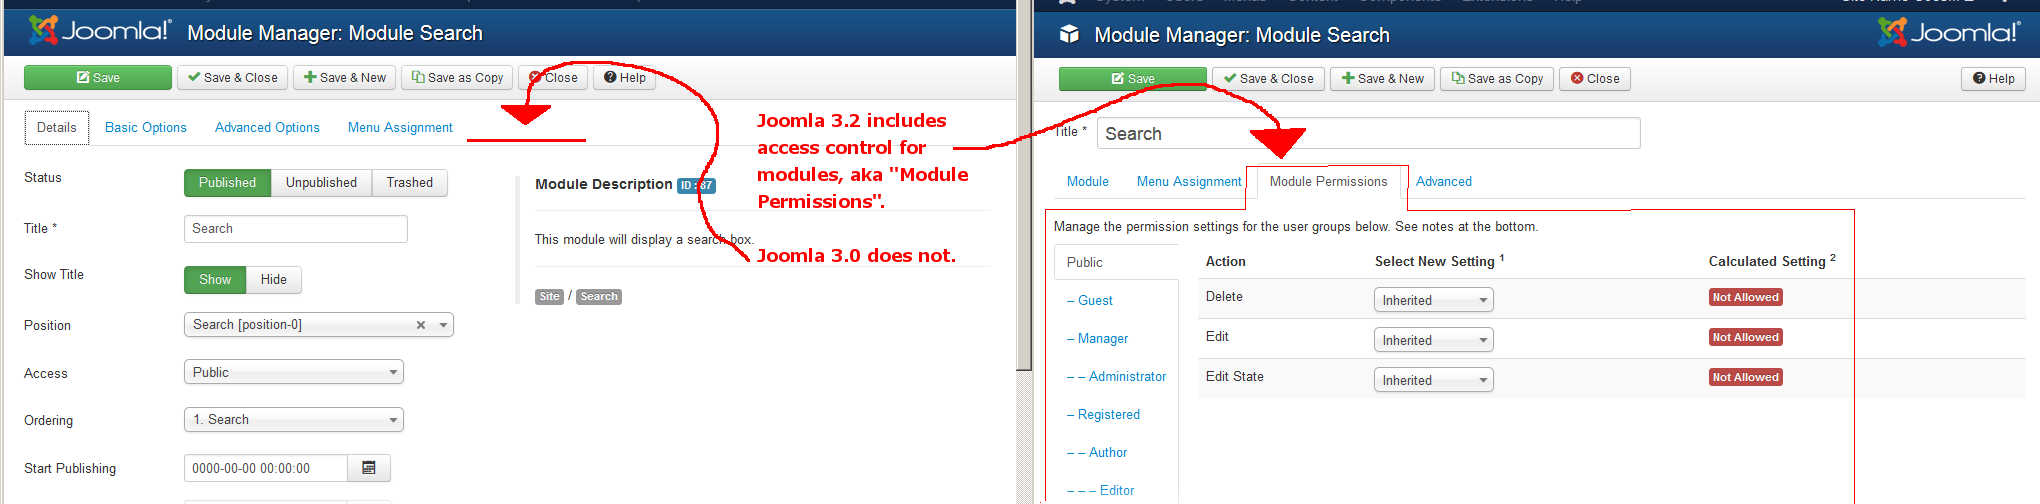 Module Permissions in Joomla 3.2